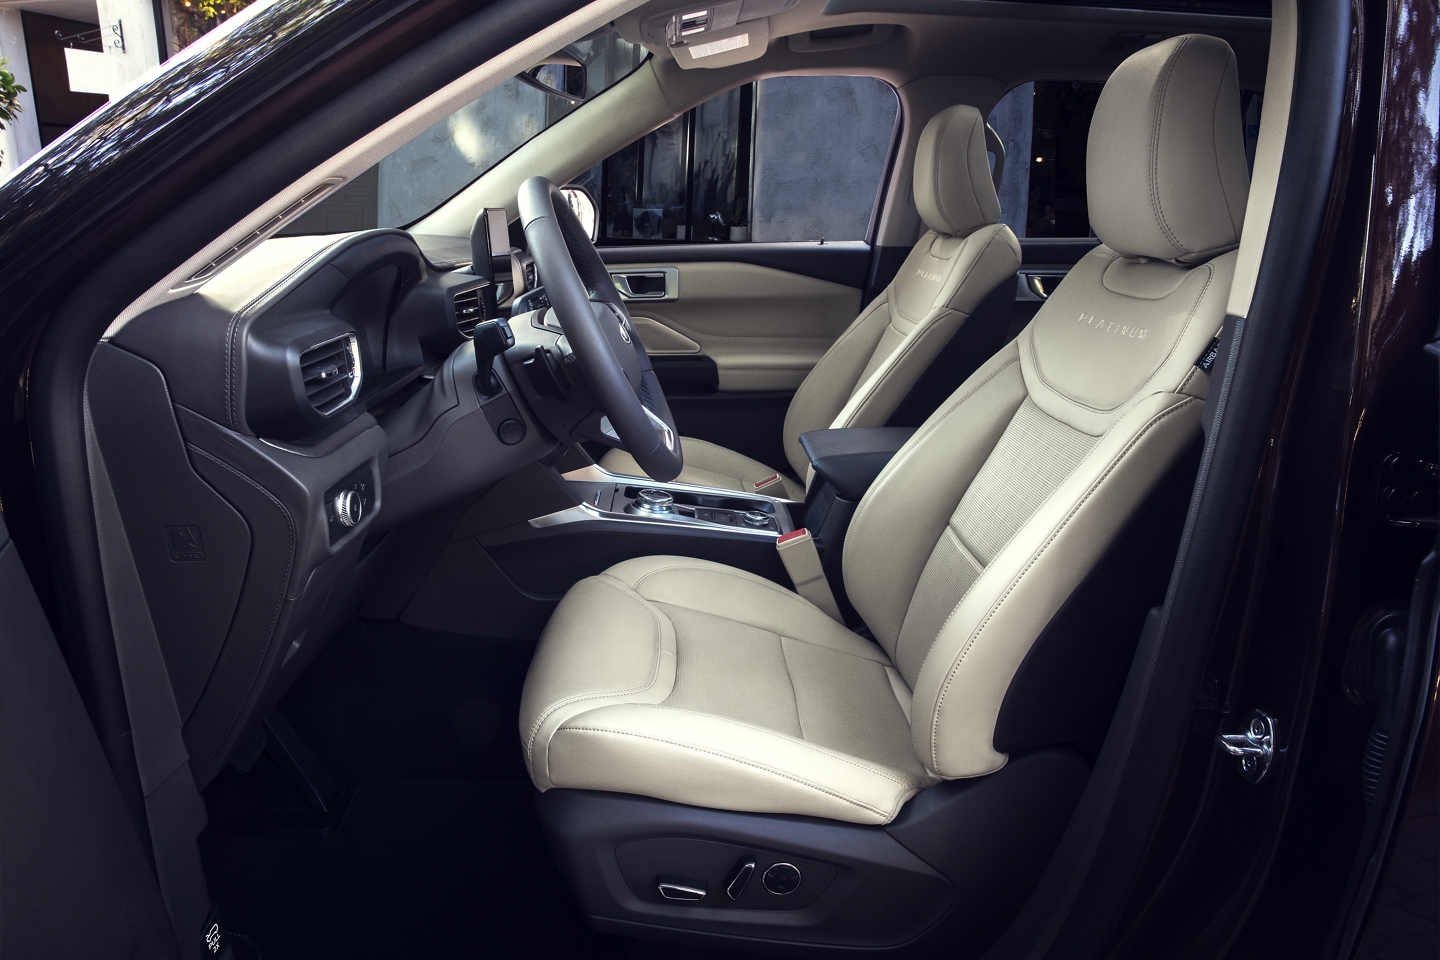 2020 Ford Explorer SUV Interior